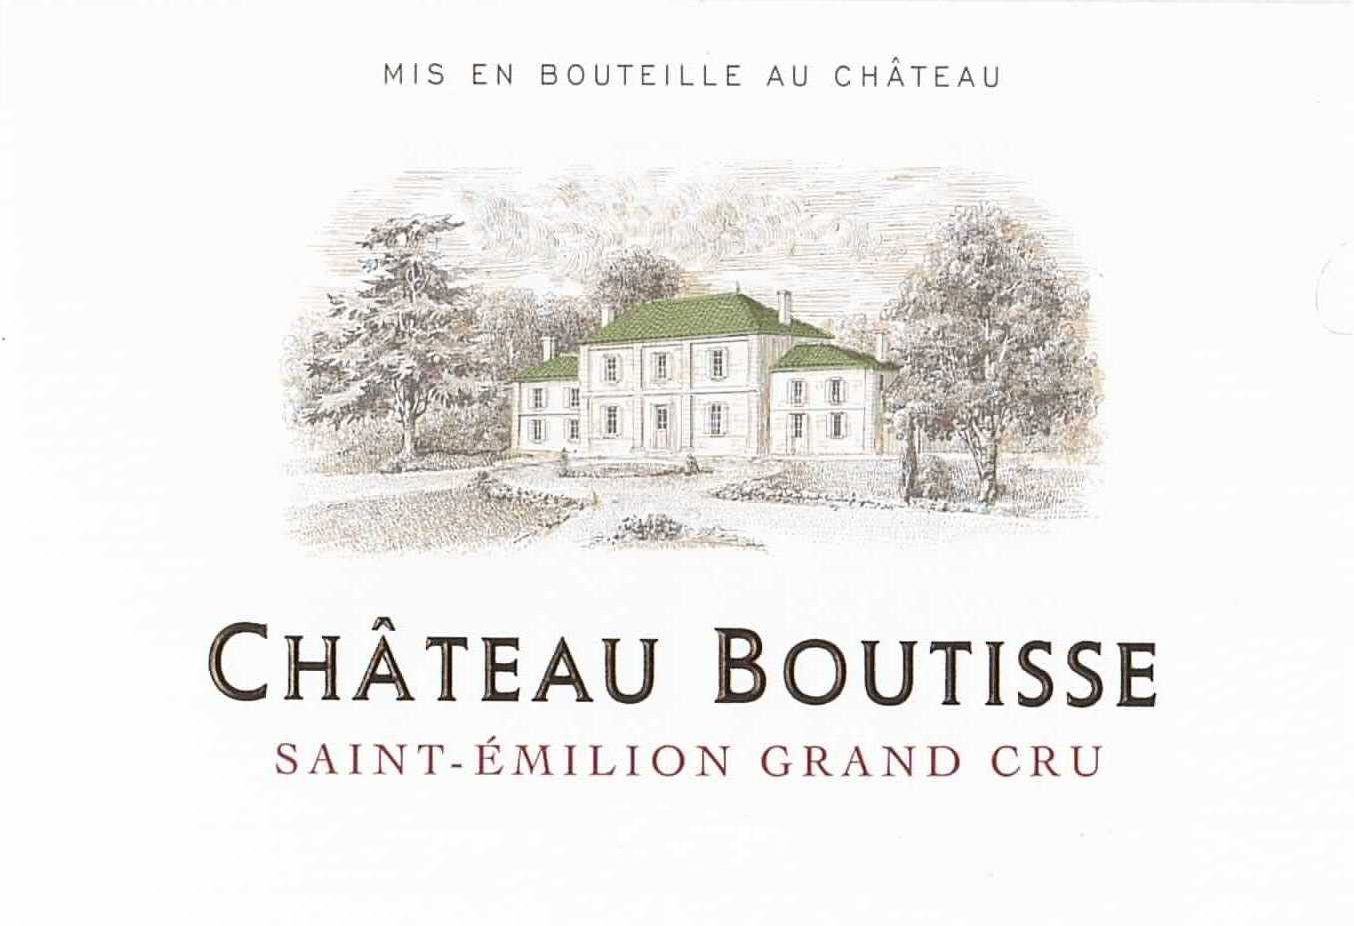 Chateau Boutisse label